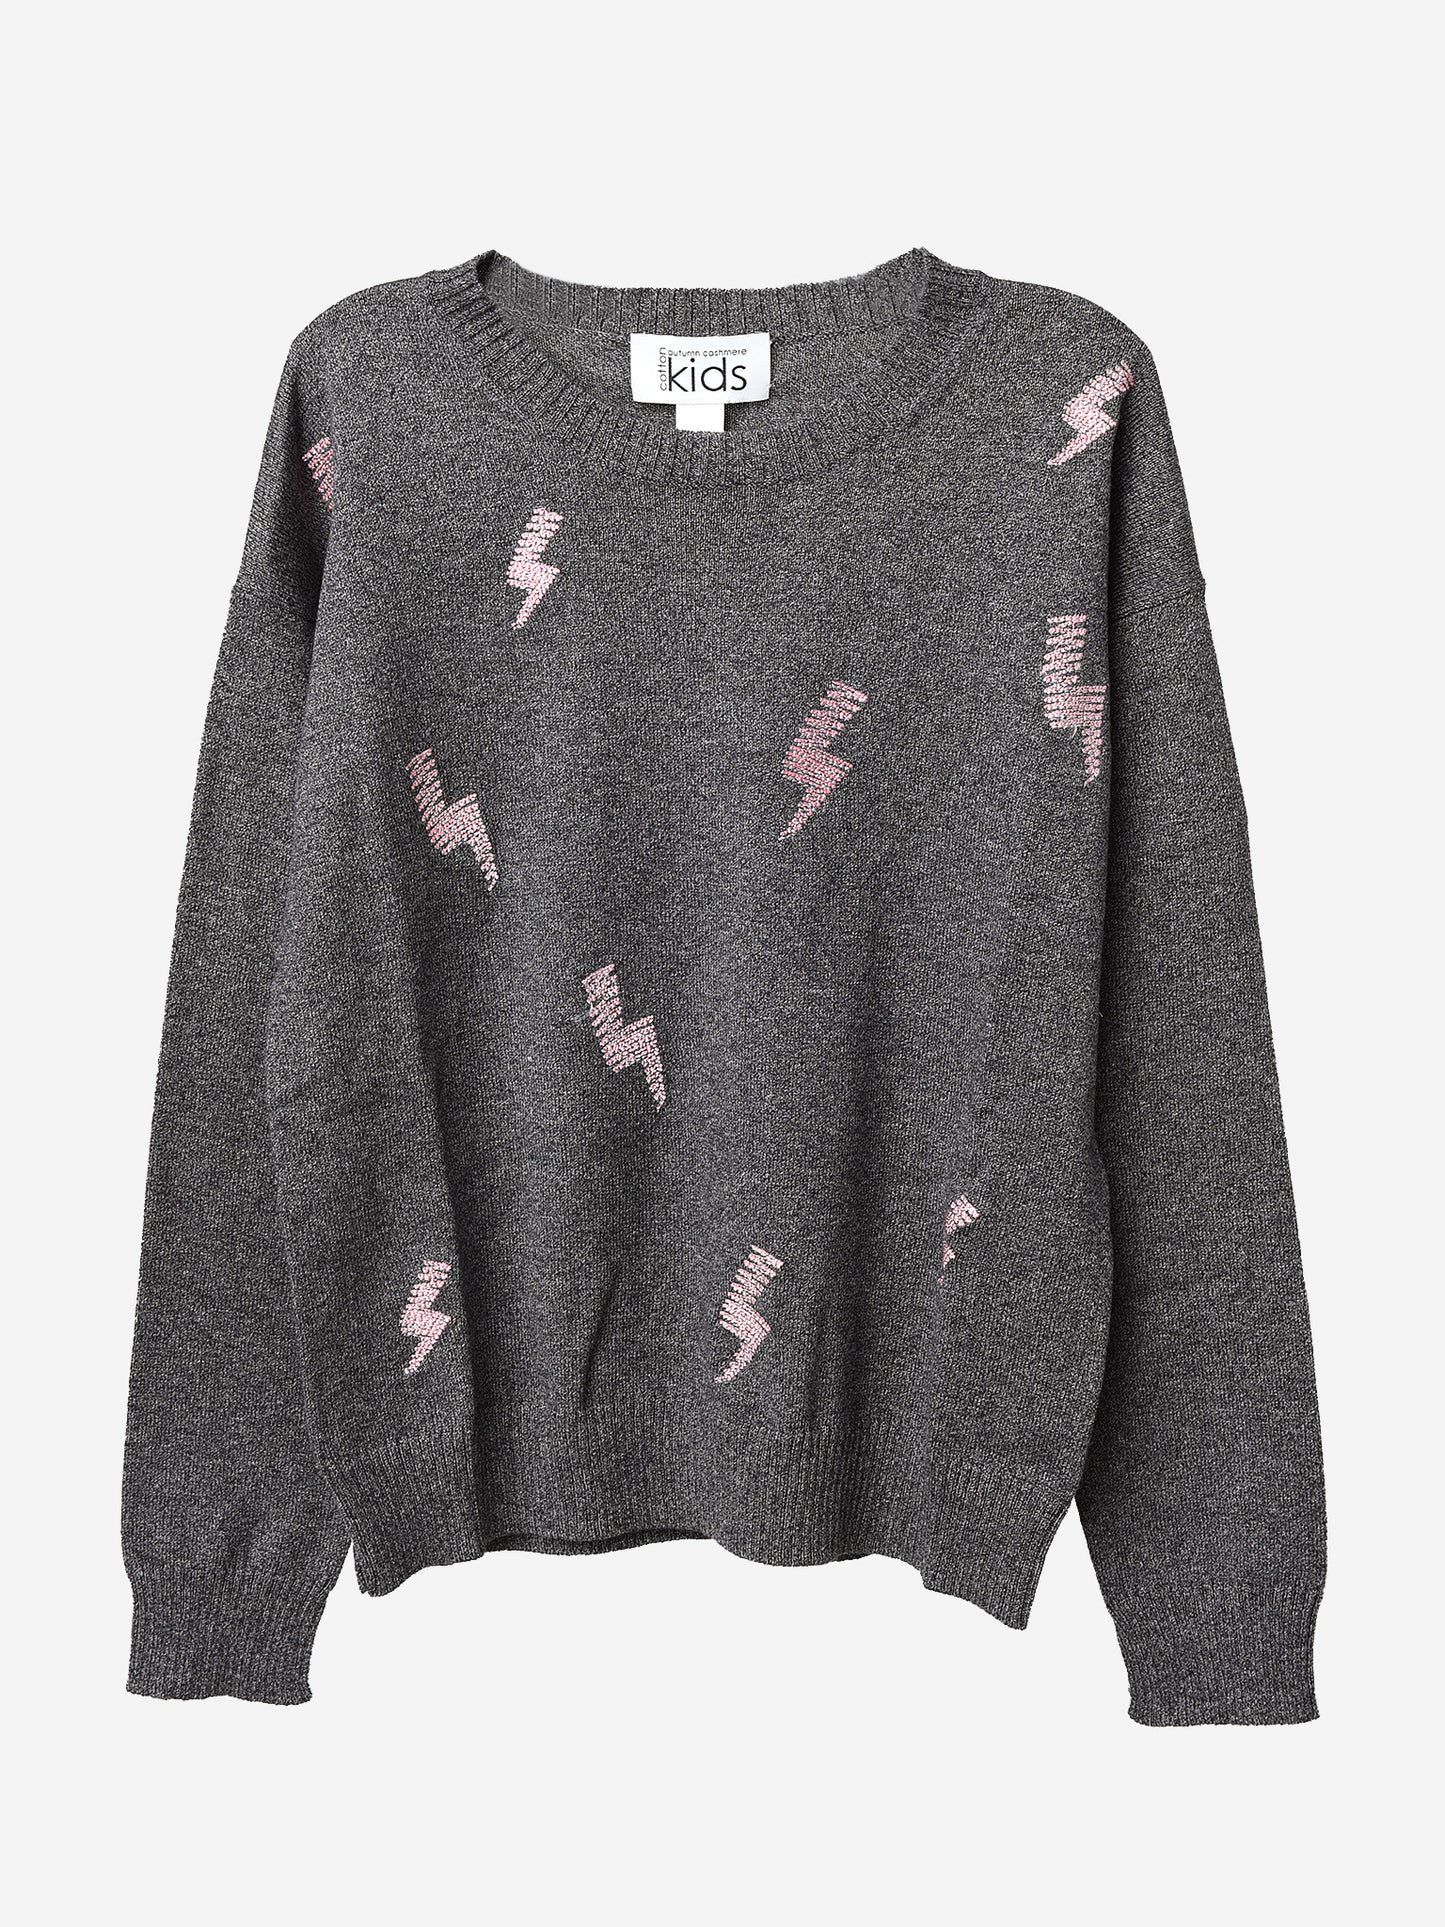 Autumn Cashmere Girls' Embroidered Lightning Sweater